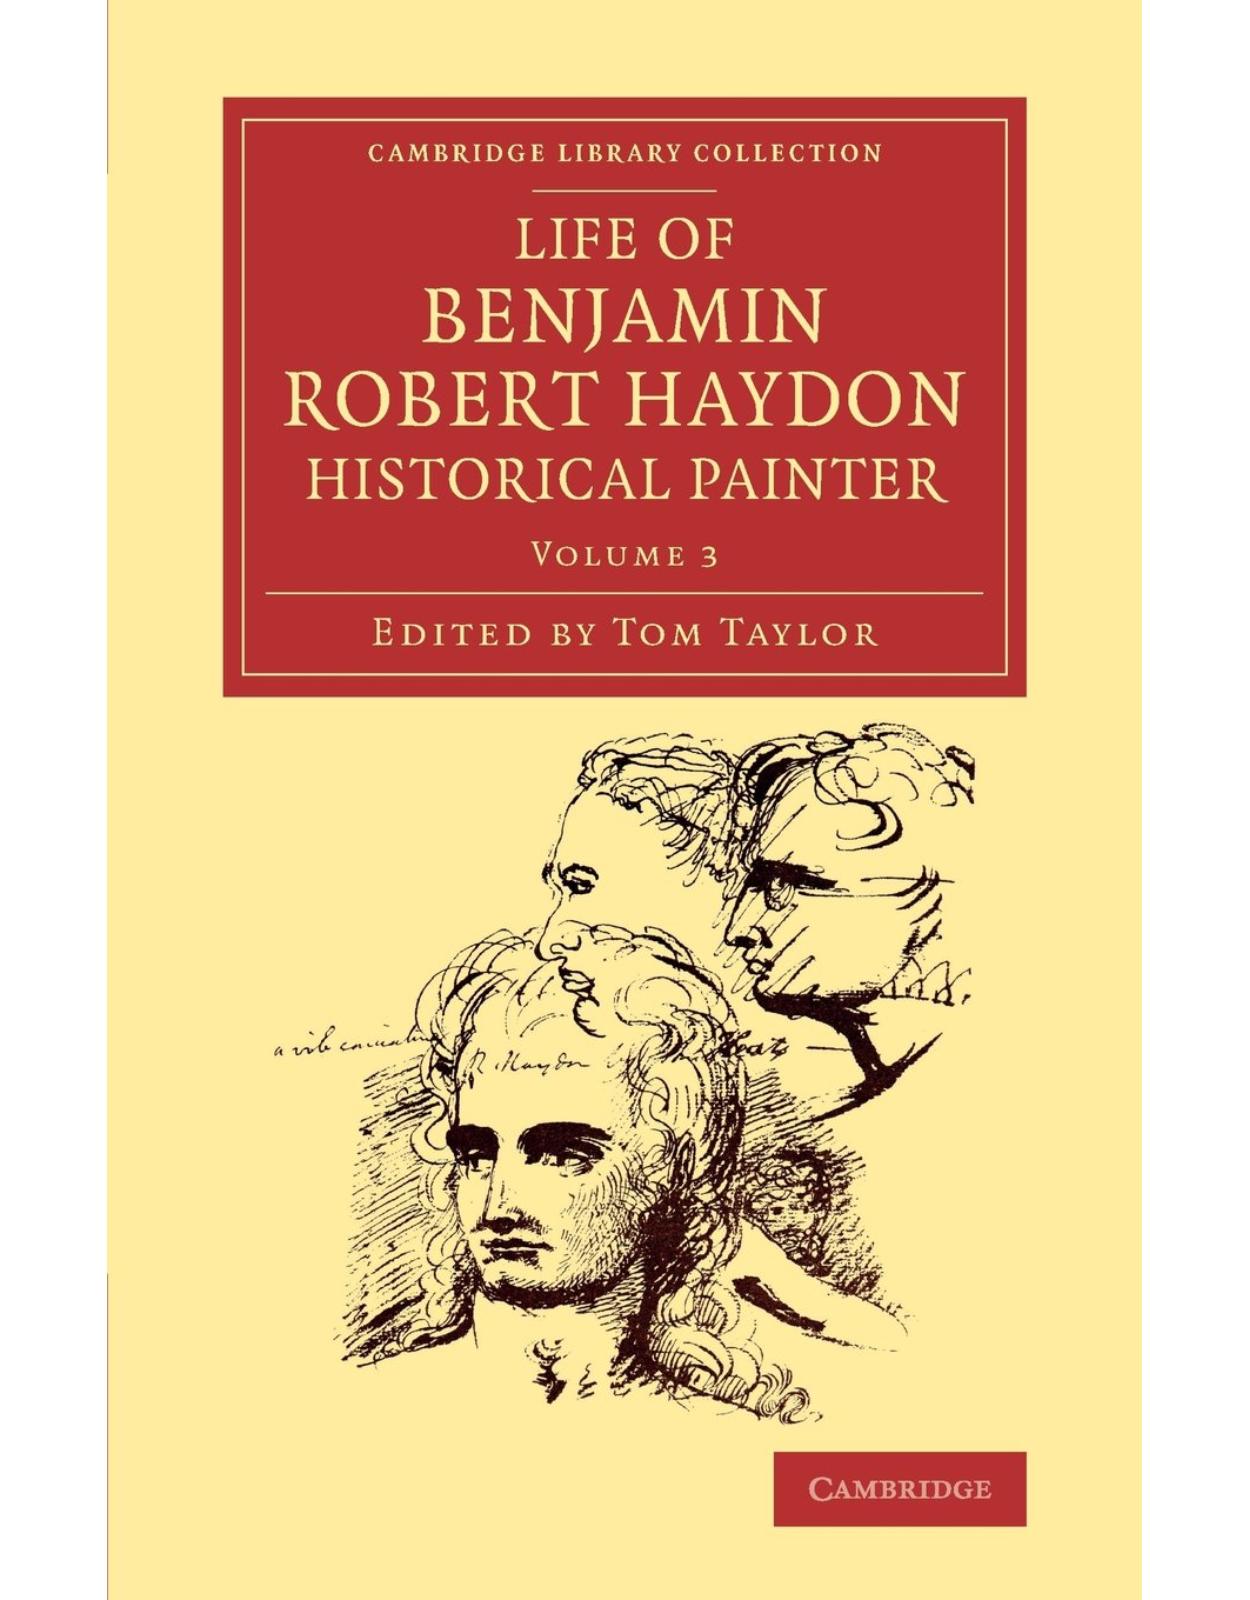 Life of Benjamin Robert Haydon, Historical Painter 3 Volume Set: From his Autobiography and Journals